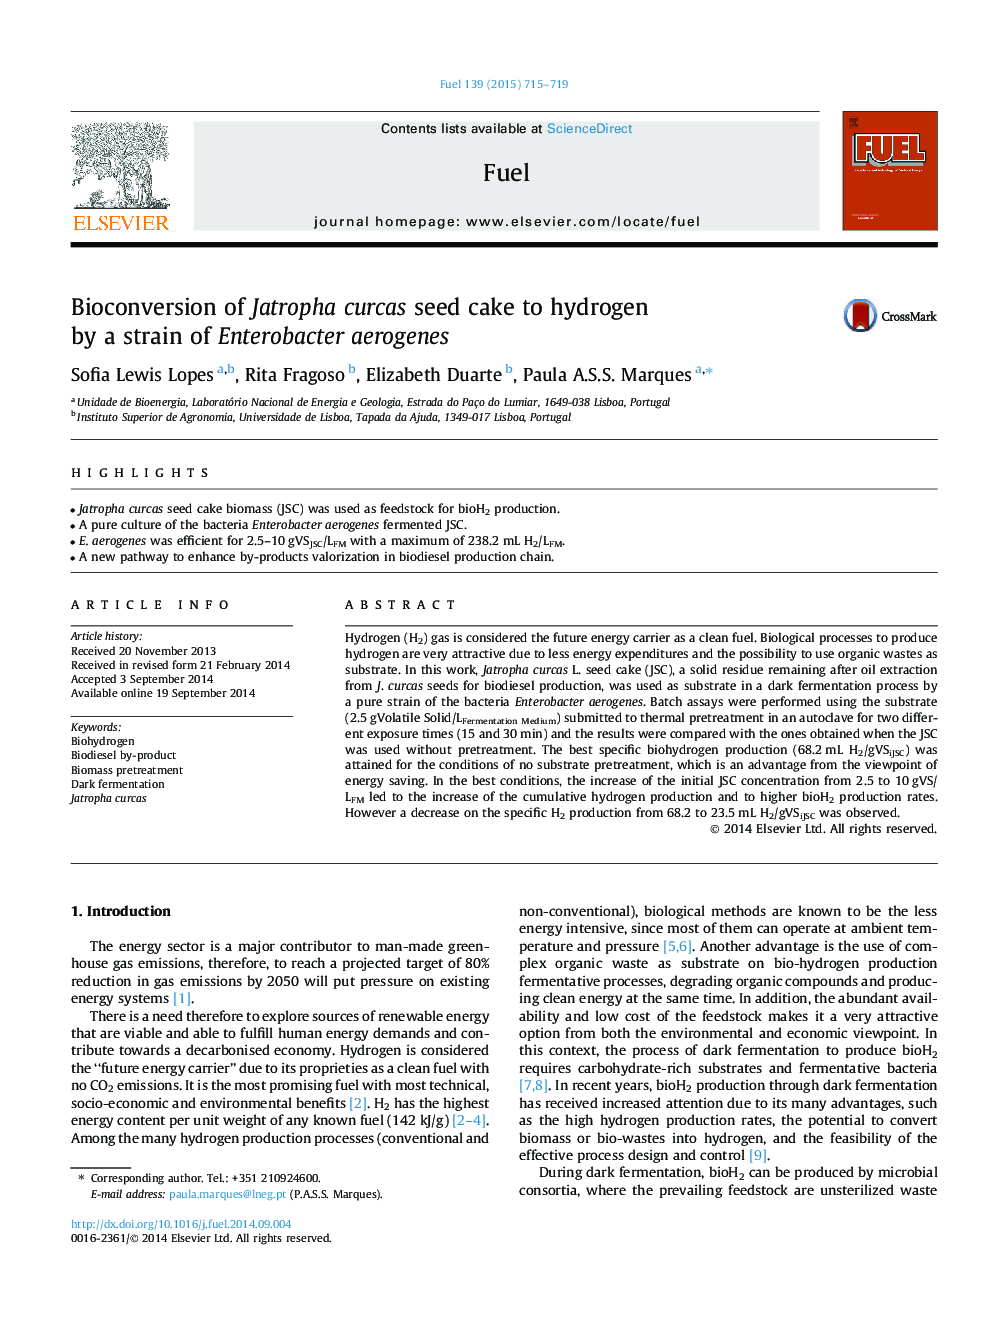 Bioconversion of Jatropha curcas seed cake to hydrogen by a strain of Enterobacter aerogenes